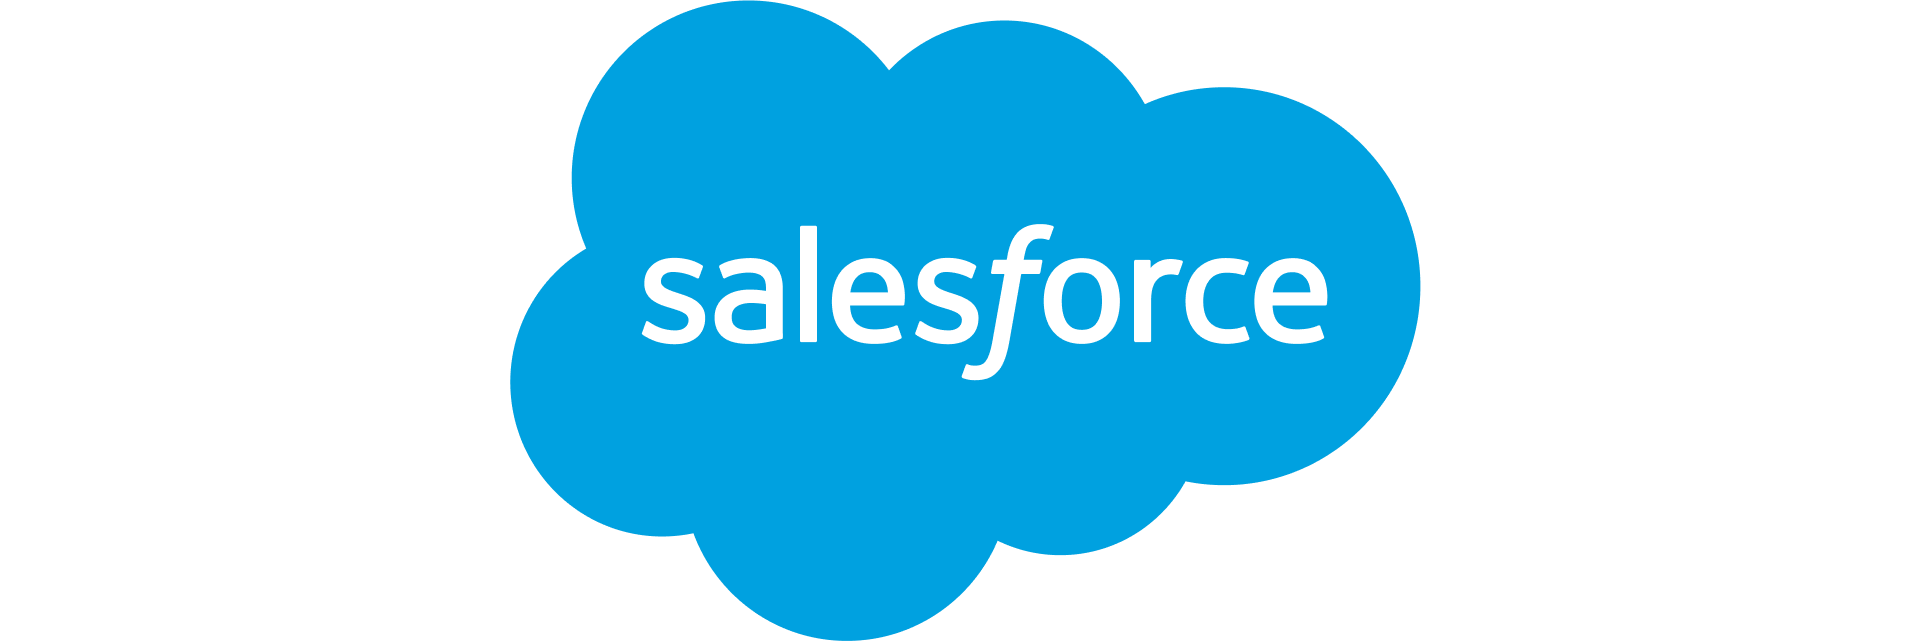 Salesforce_HQ